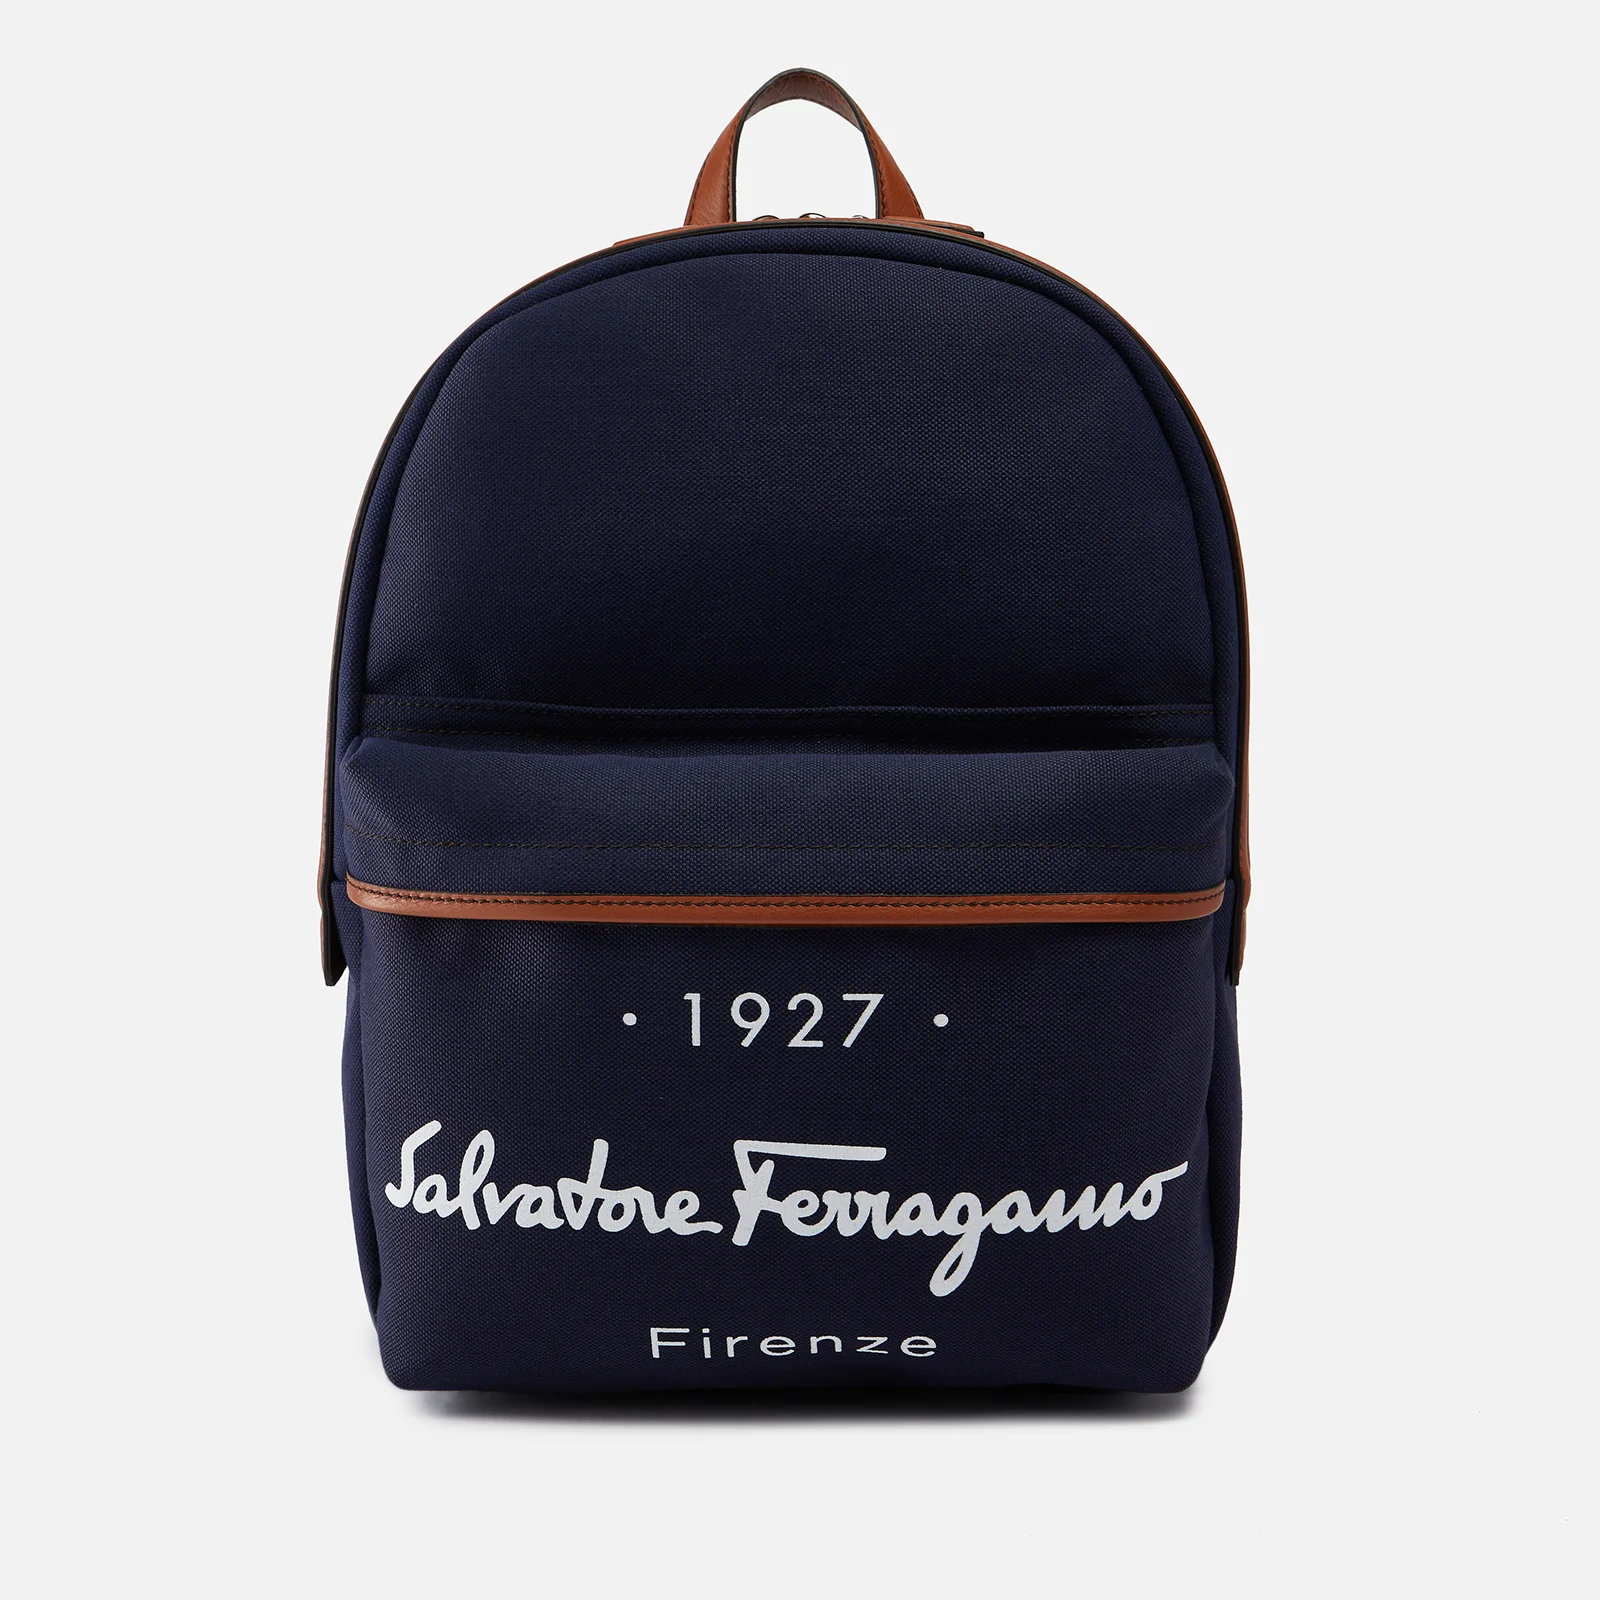 Salvatore Ferragamo 1927 Backpack Image 1